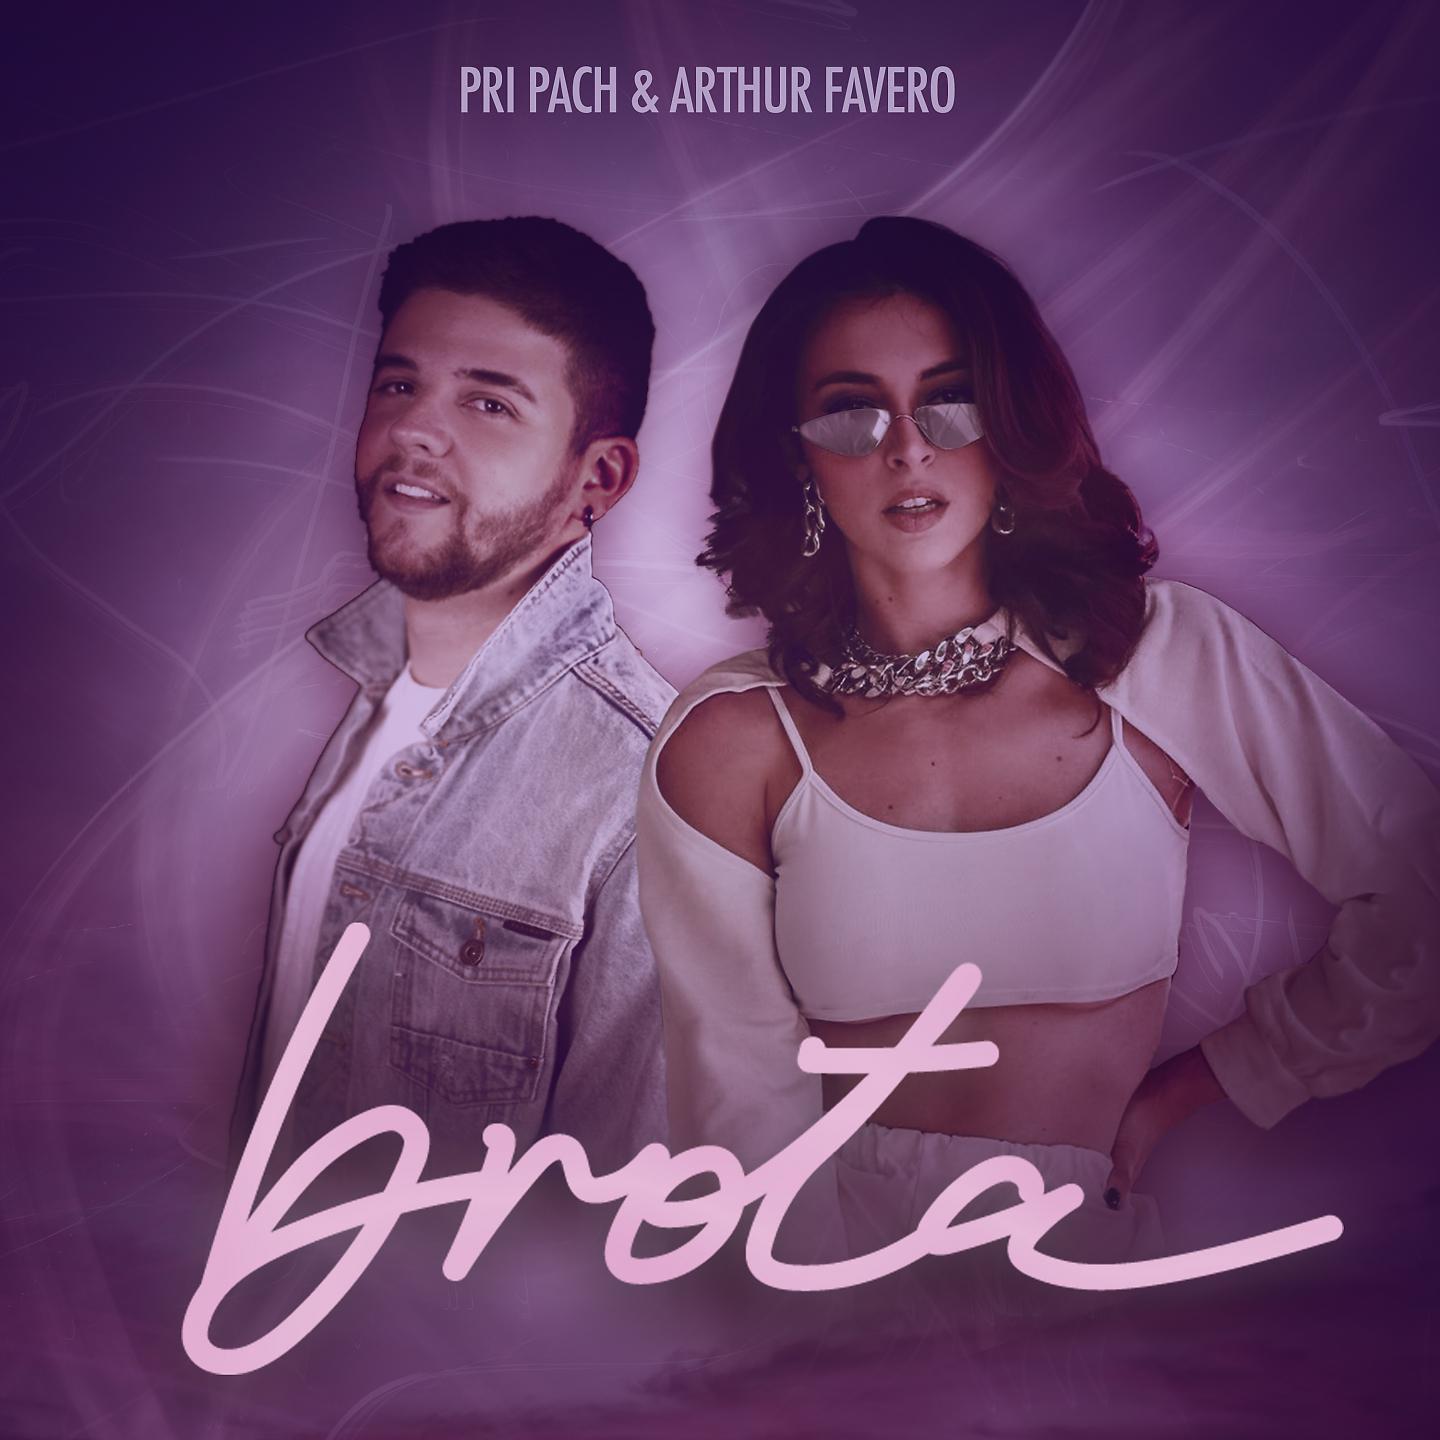 Постер альбома Brota